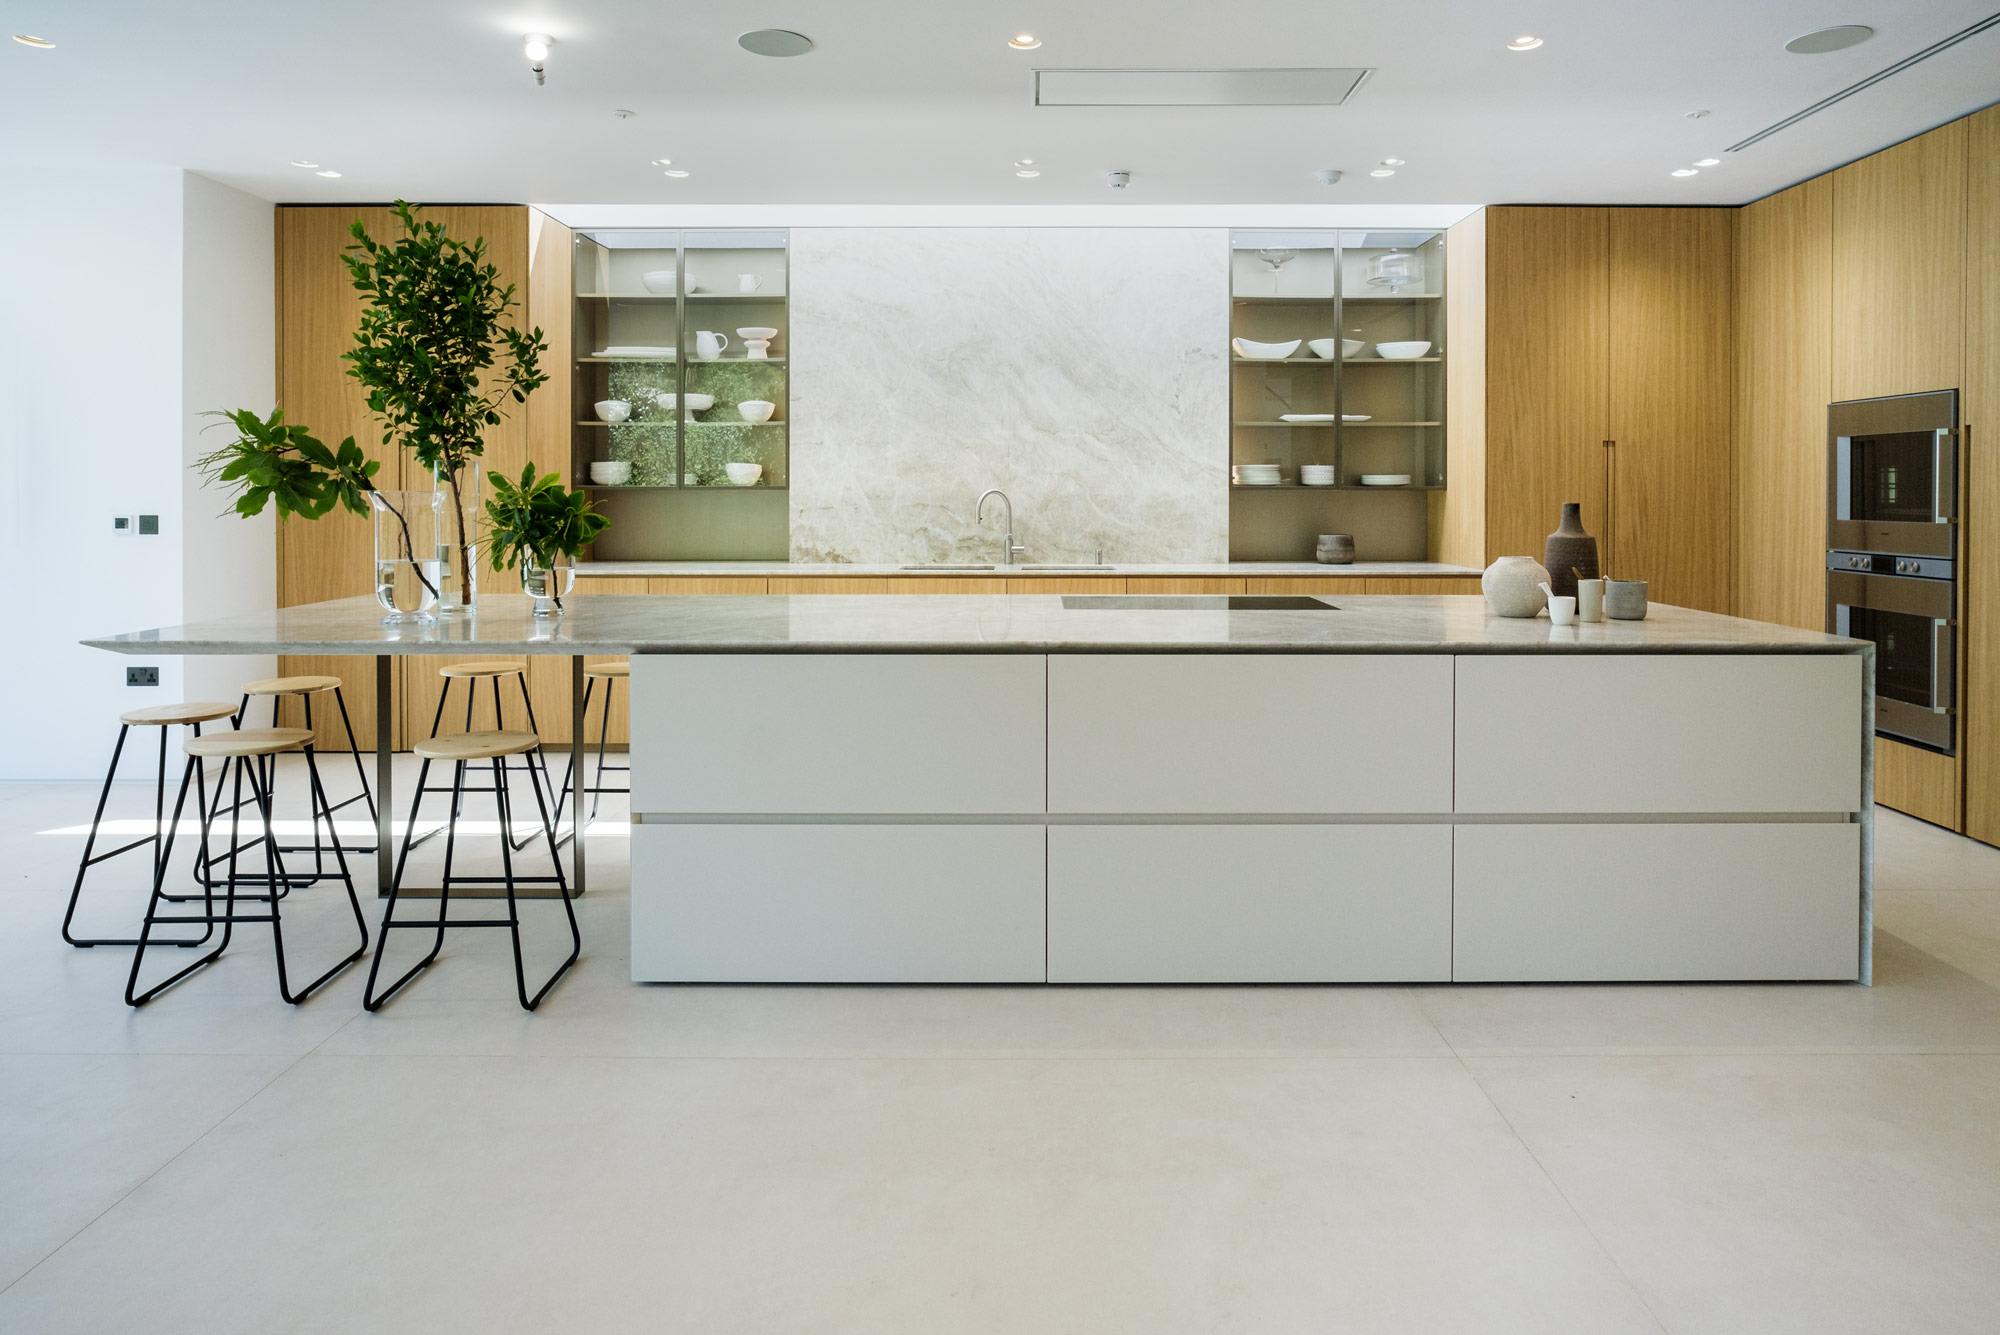 A contemporary kitchen london N3 created by Fontana London Fairholme Close Finchley London N3 | Design as Art | interior architectural design studio portfolio pictures